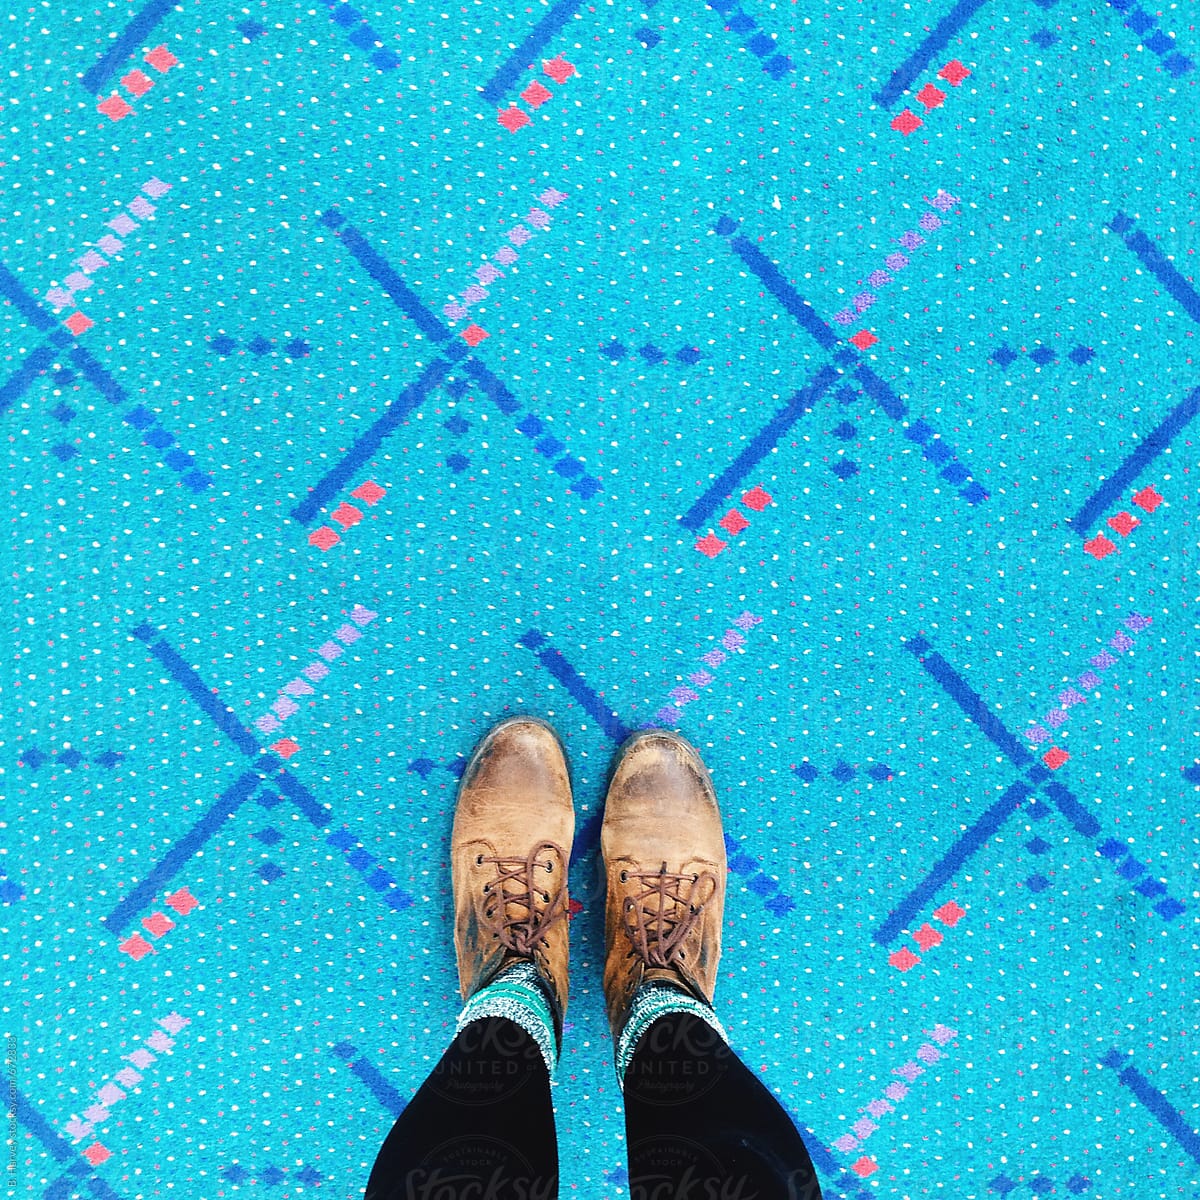 Portland Airport Carpet By Stocksy Contributor Branden Harvey Stories